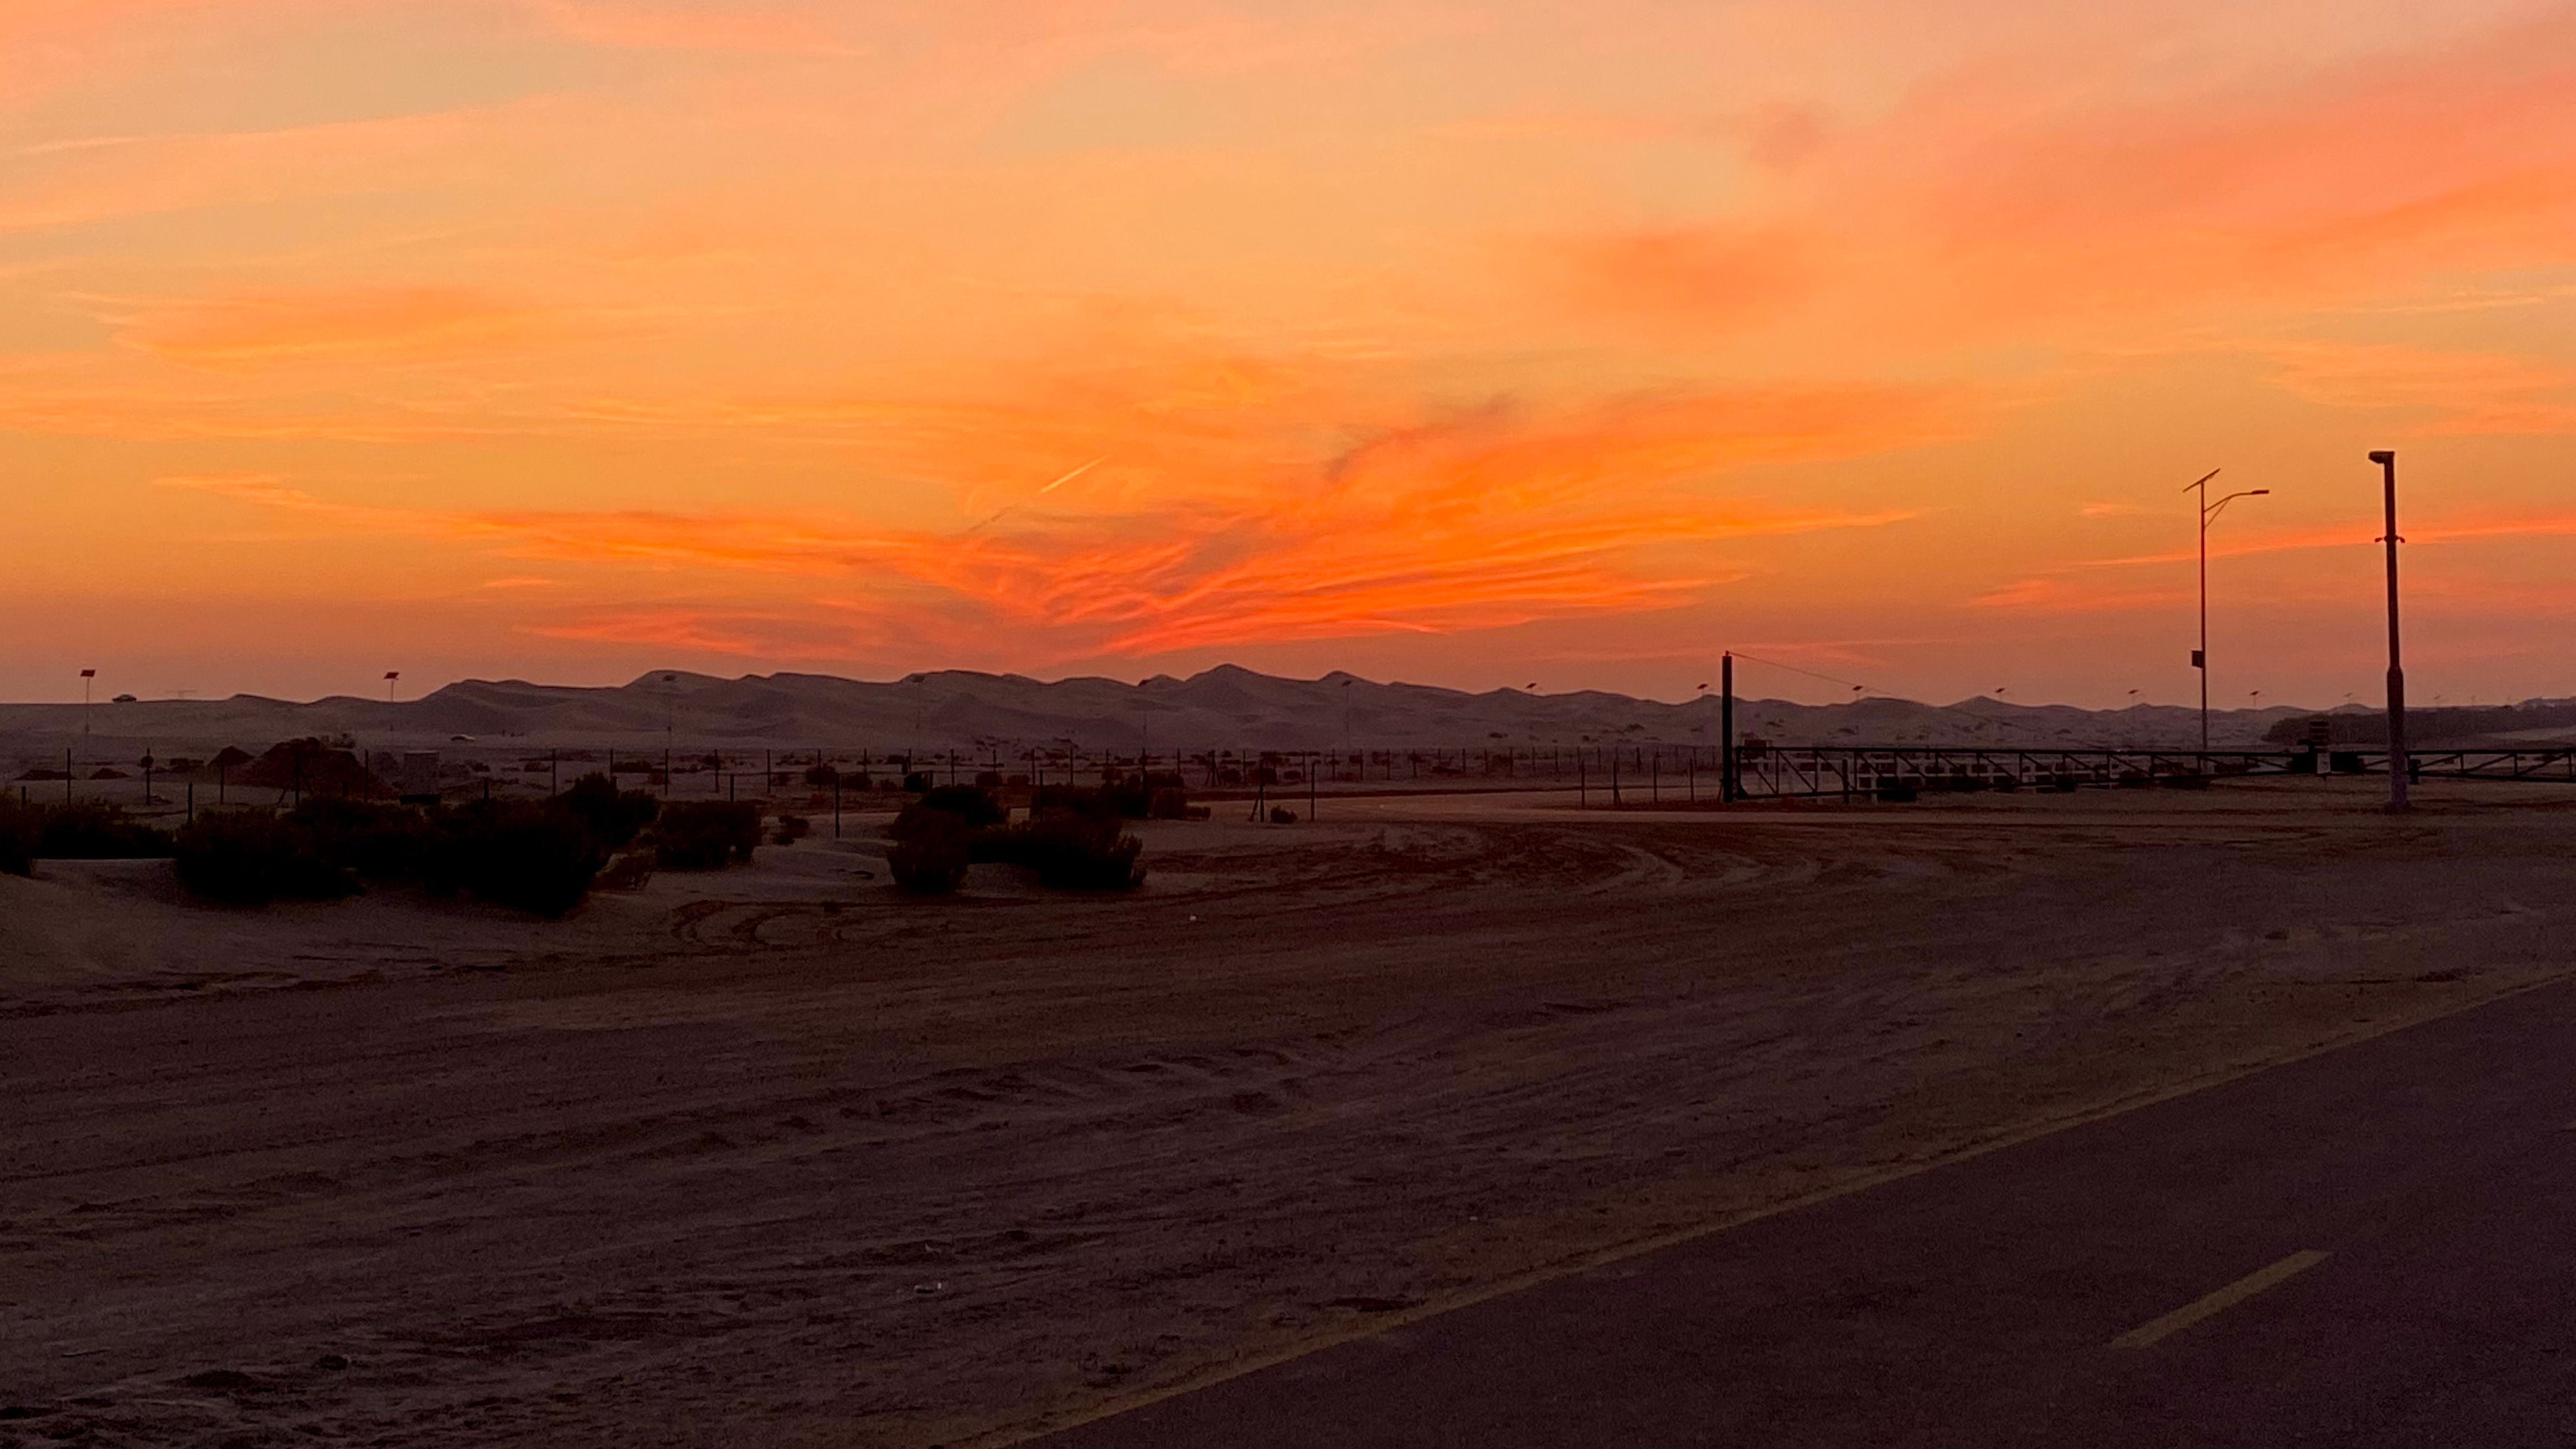 The sun setting over the Al Wathba desert